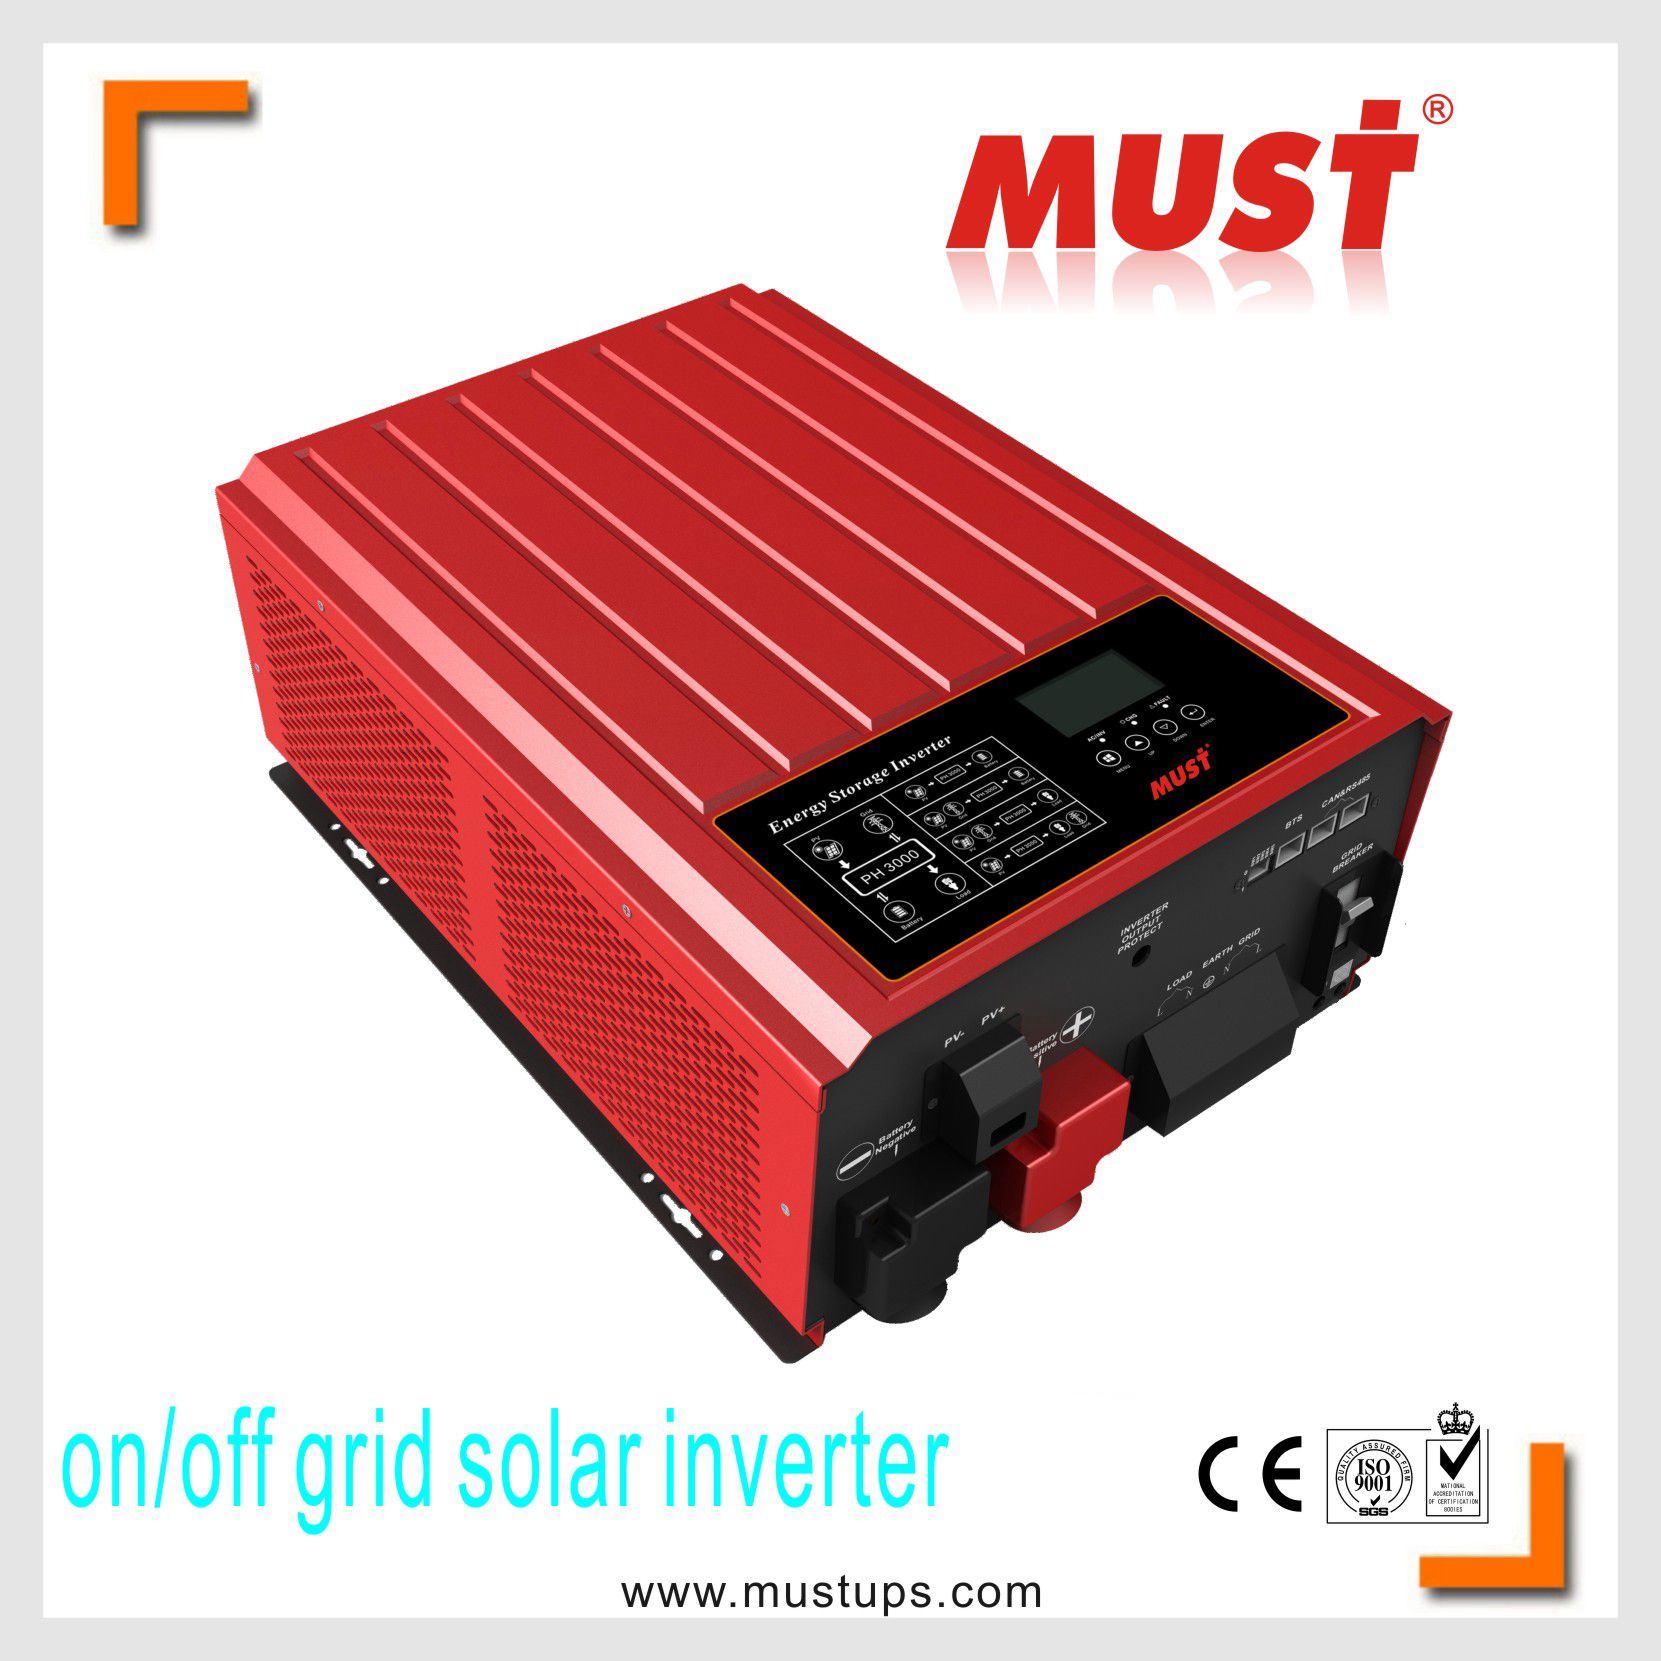 pH3000 on &off Grid Tie Solar 3kw